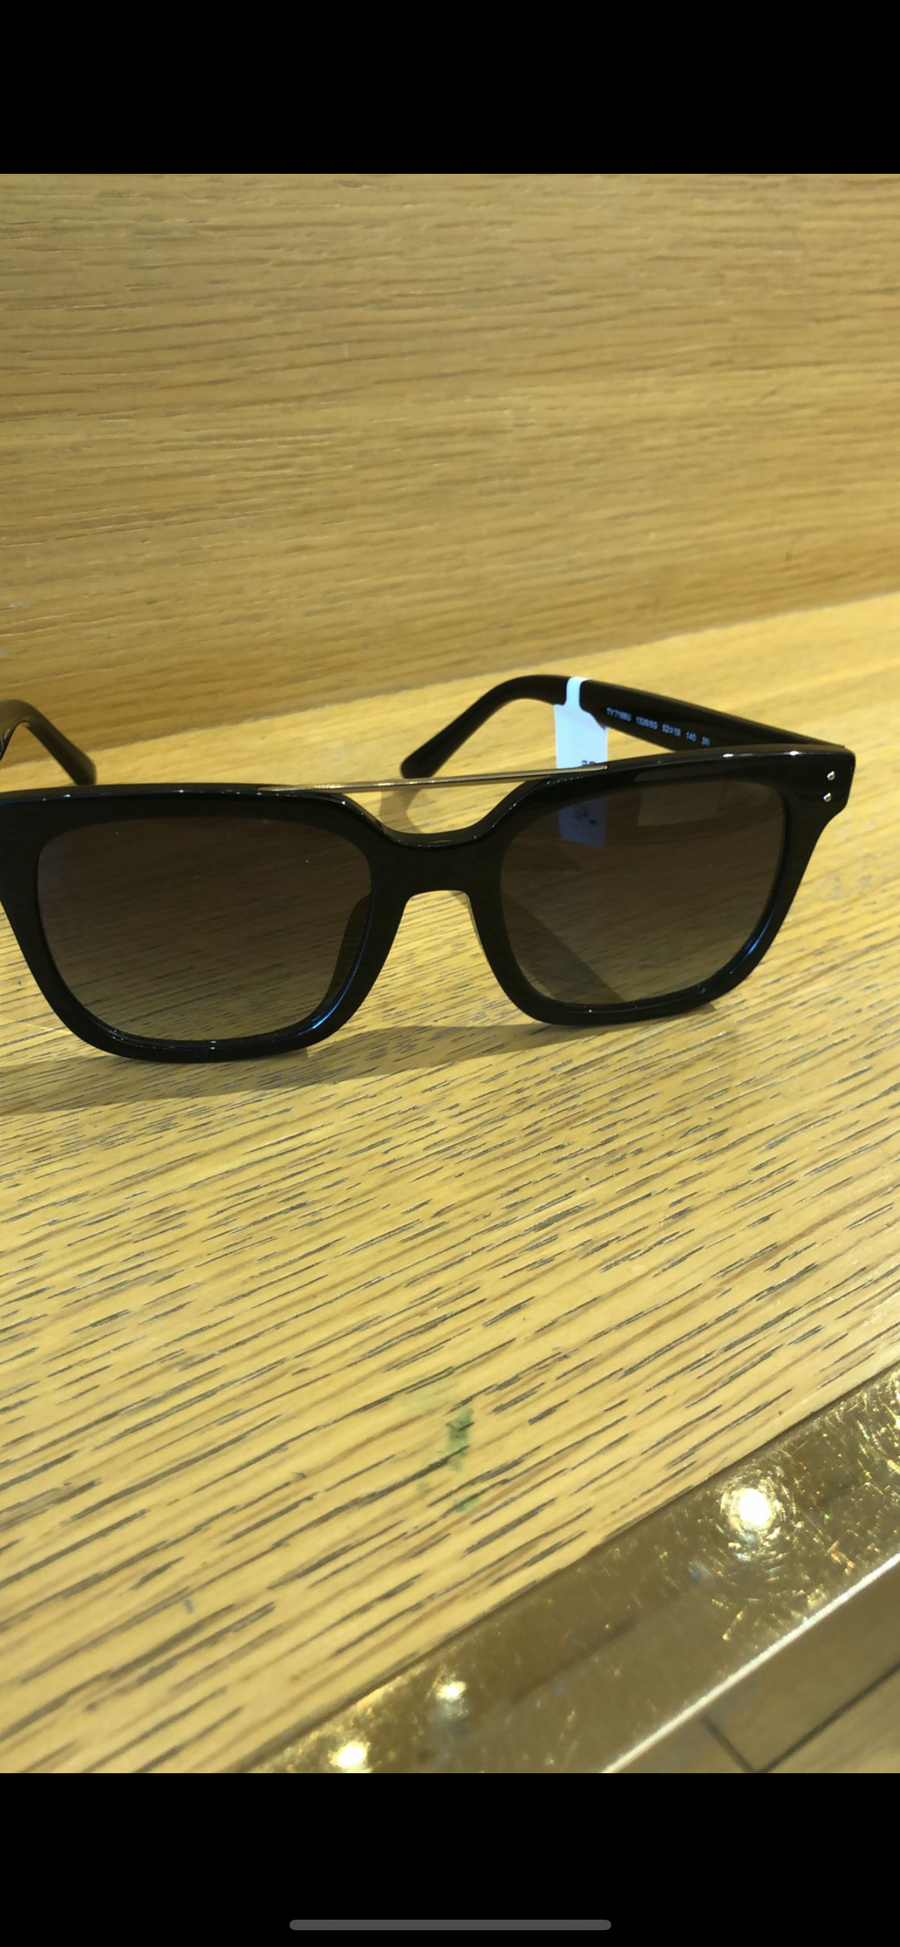 Tory Burch sunglasses